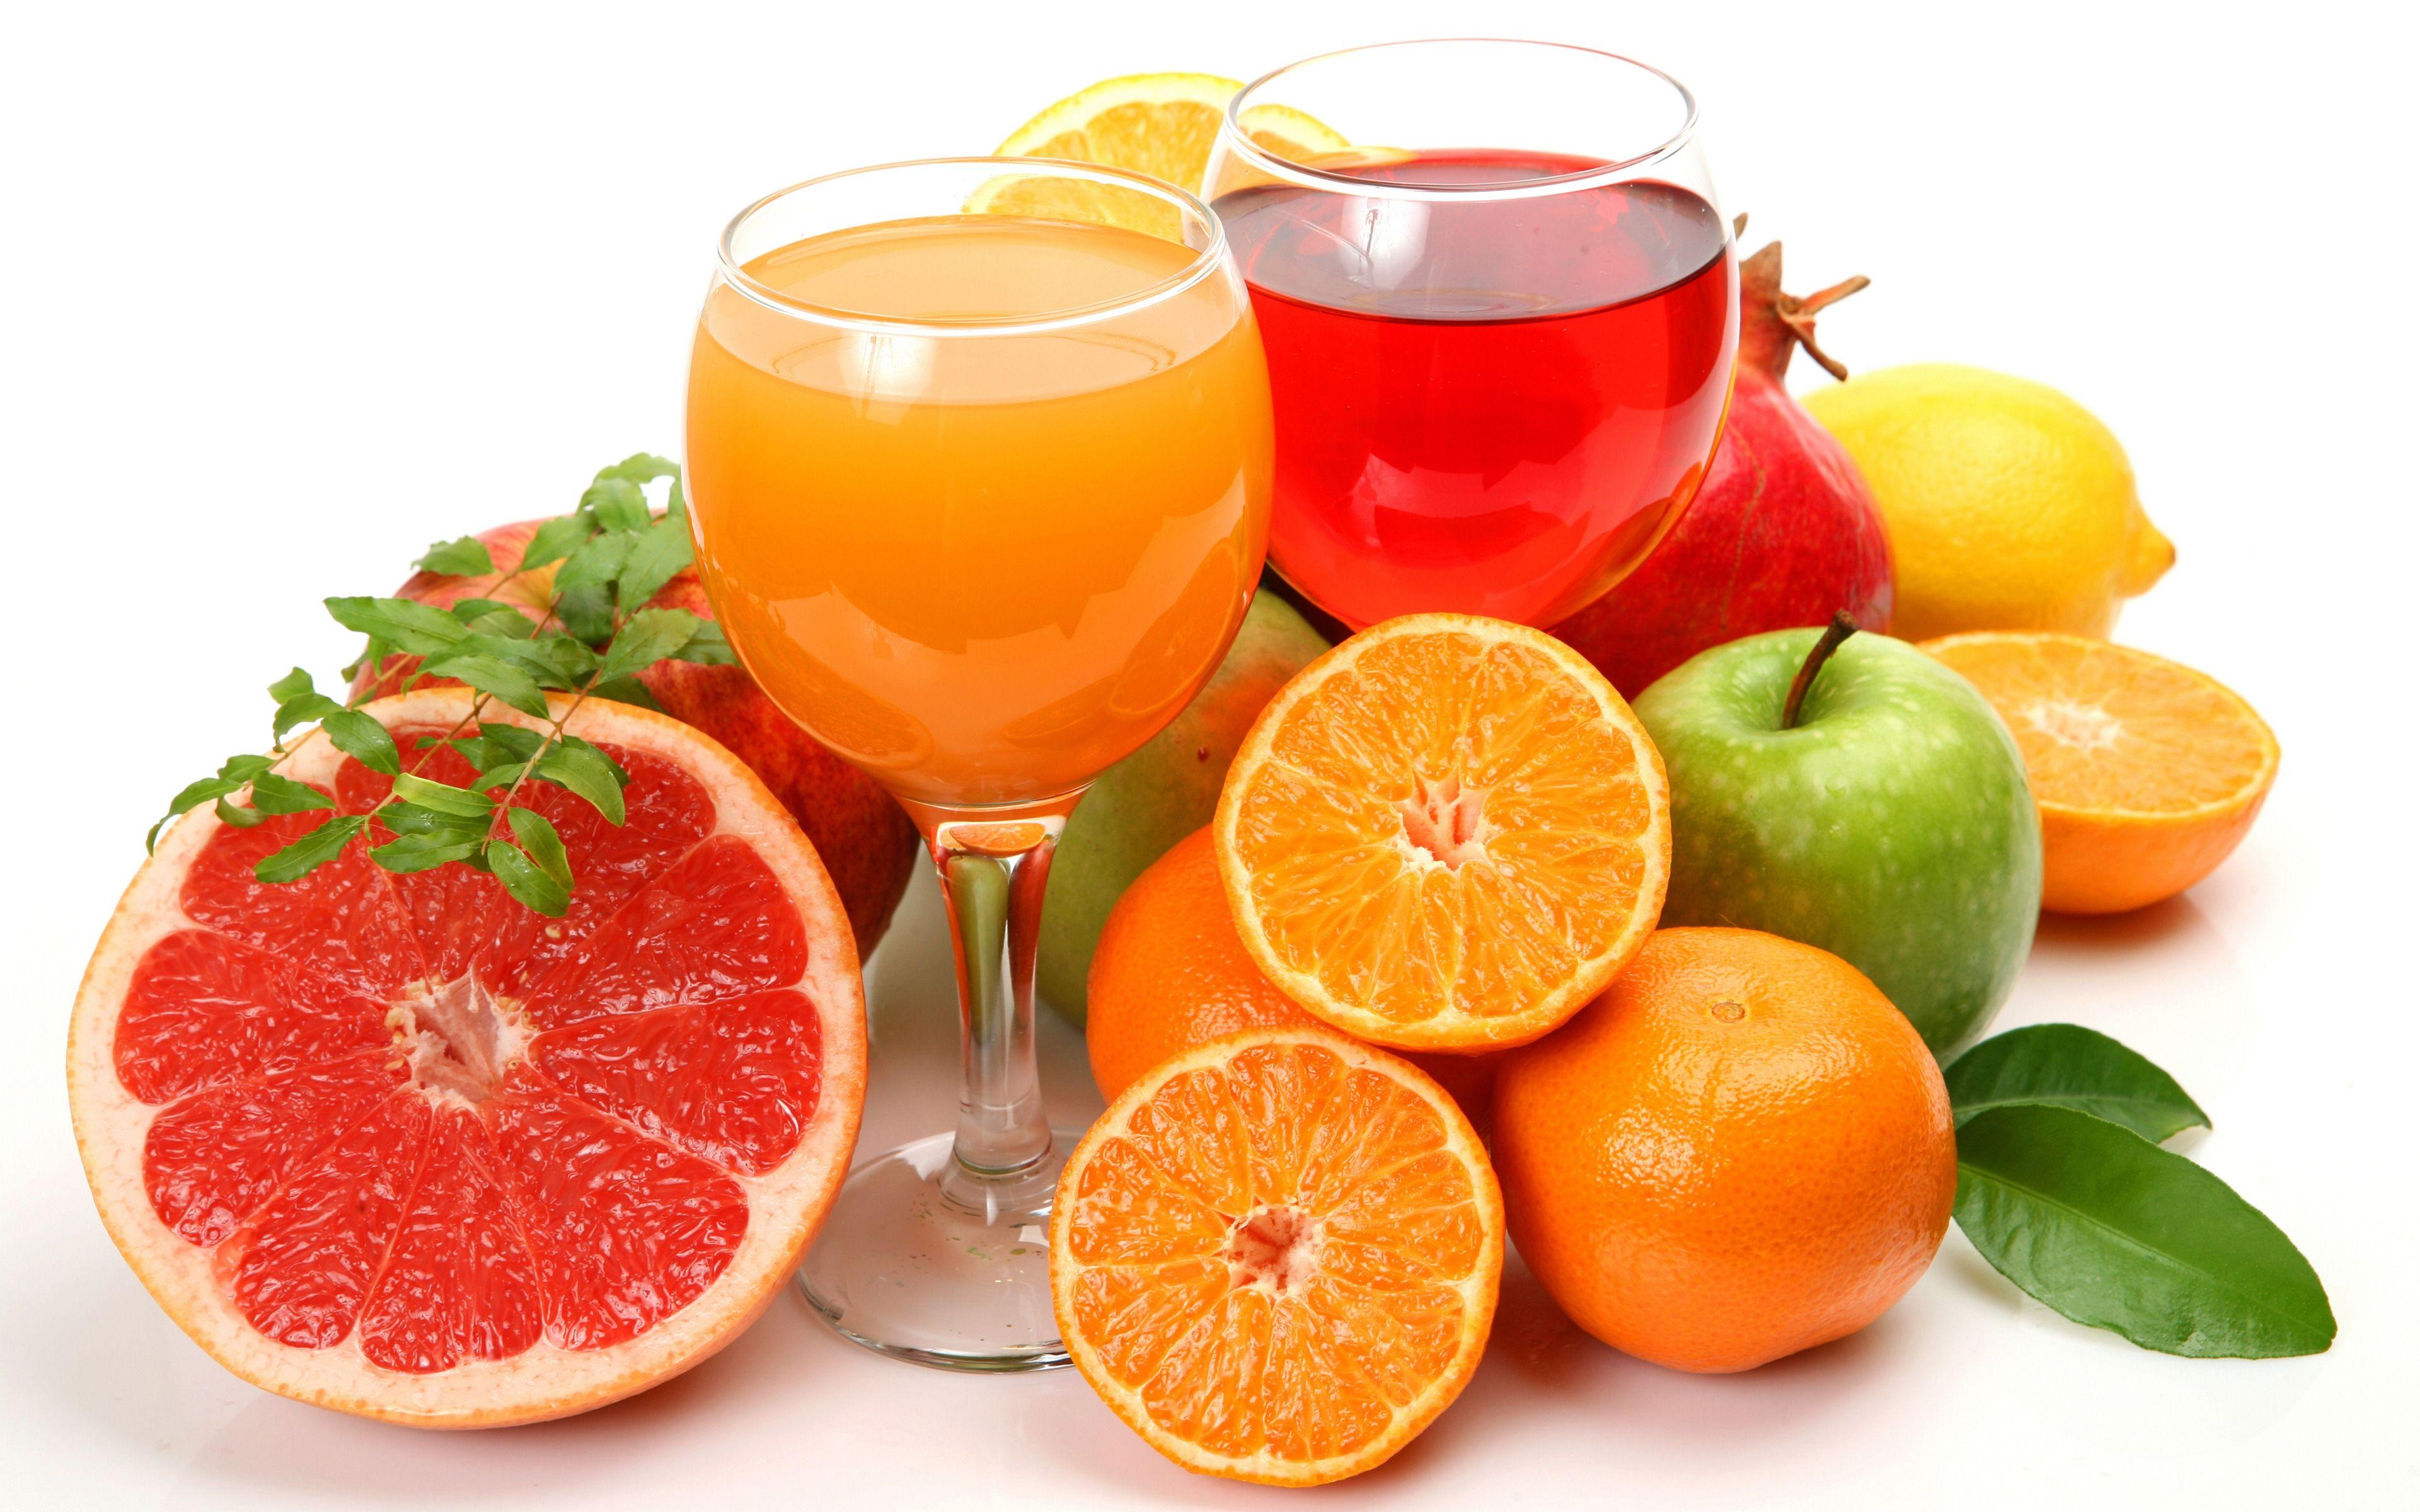 Orange juice Free Stock Photos, Images, and Pictures of Orange juice